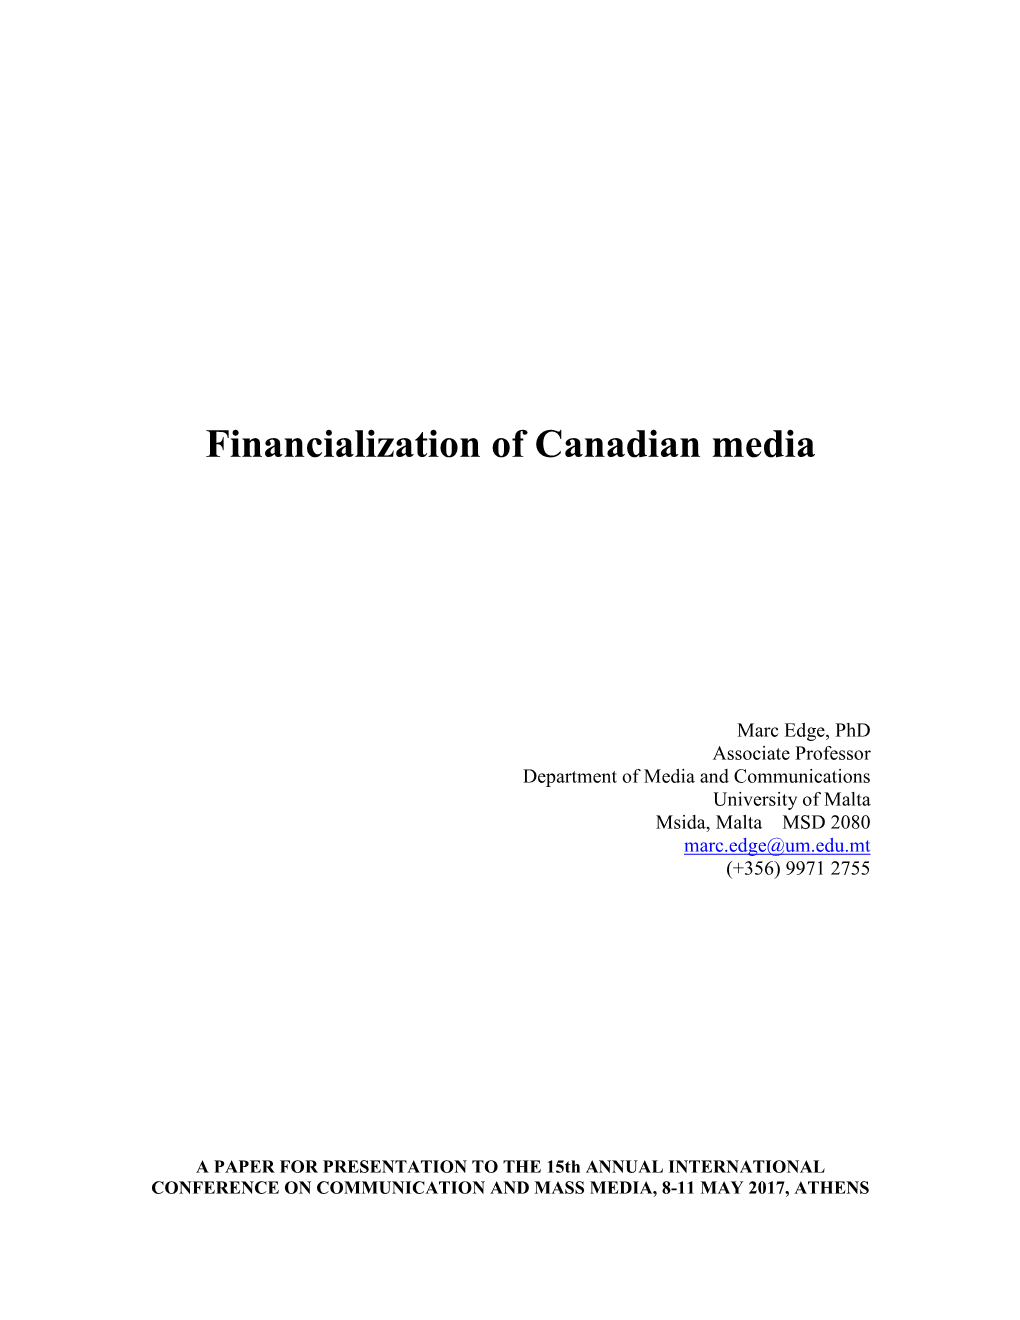 Financialization of Canadian Media